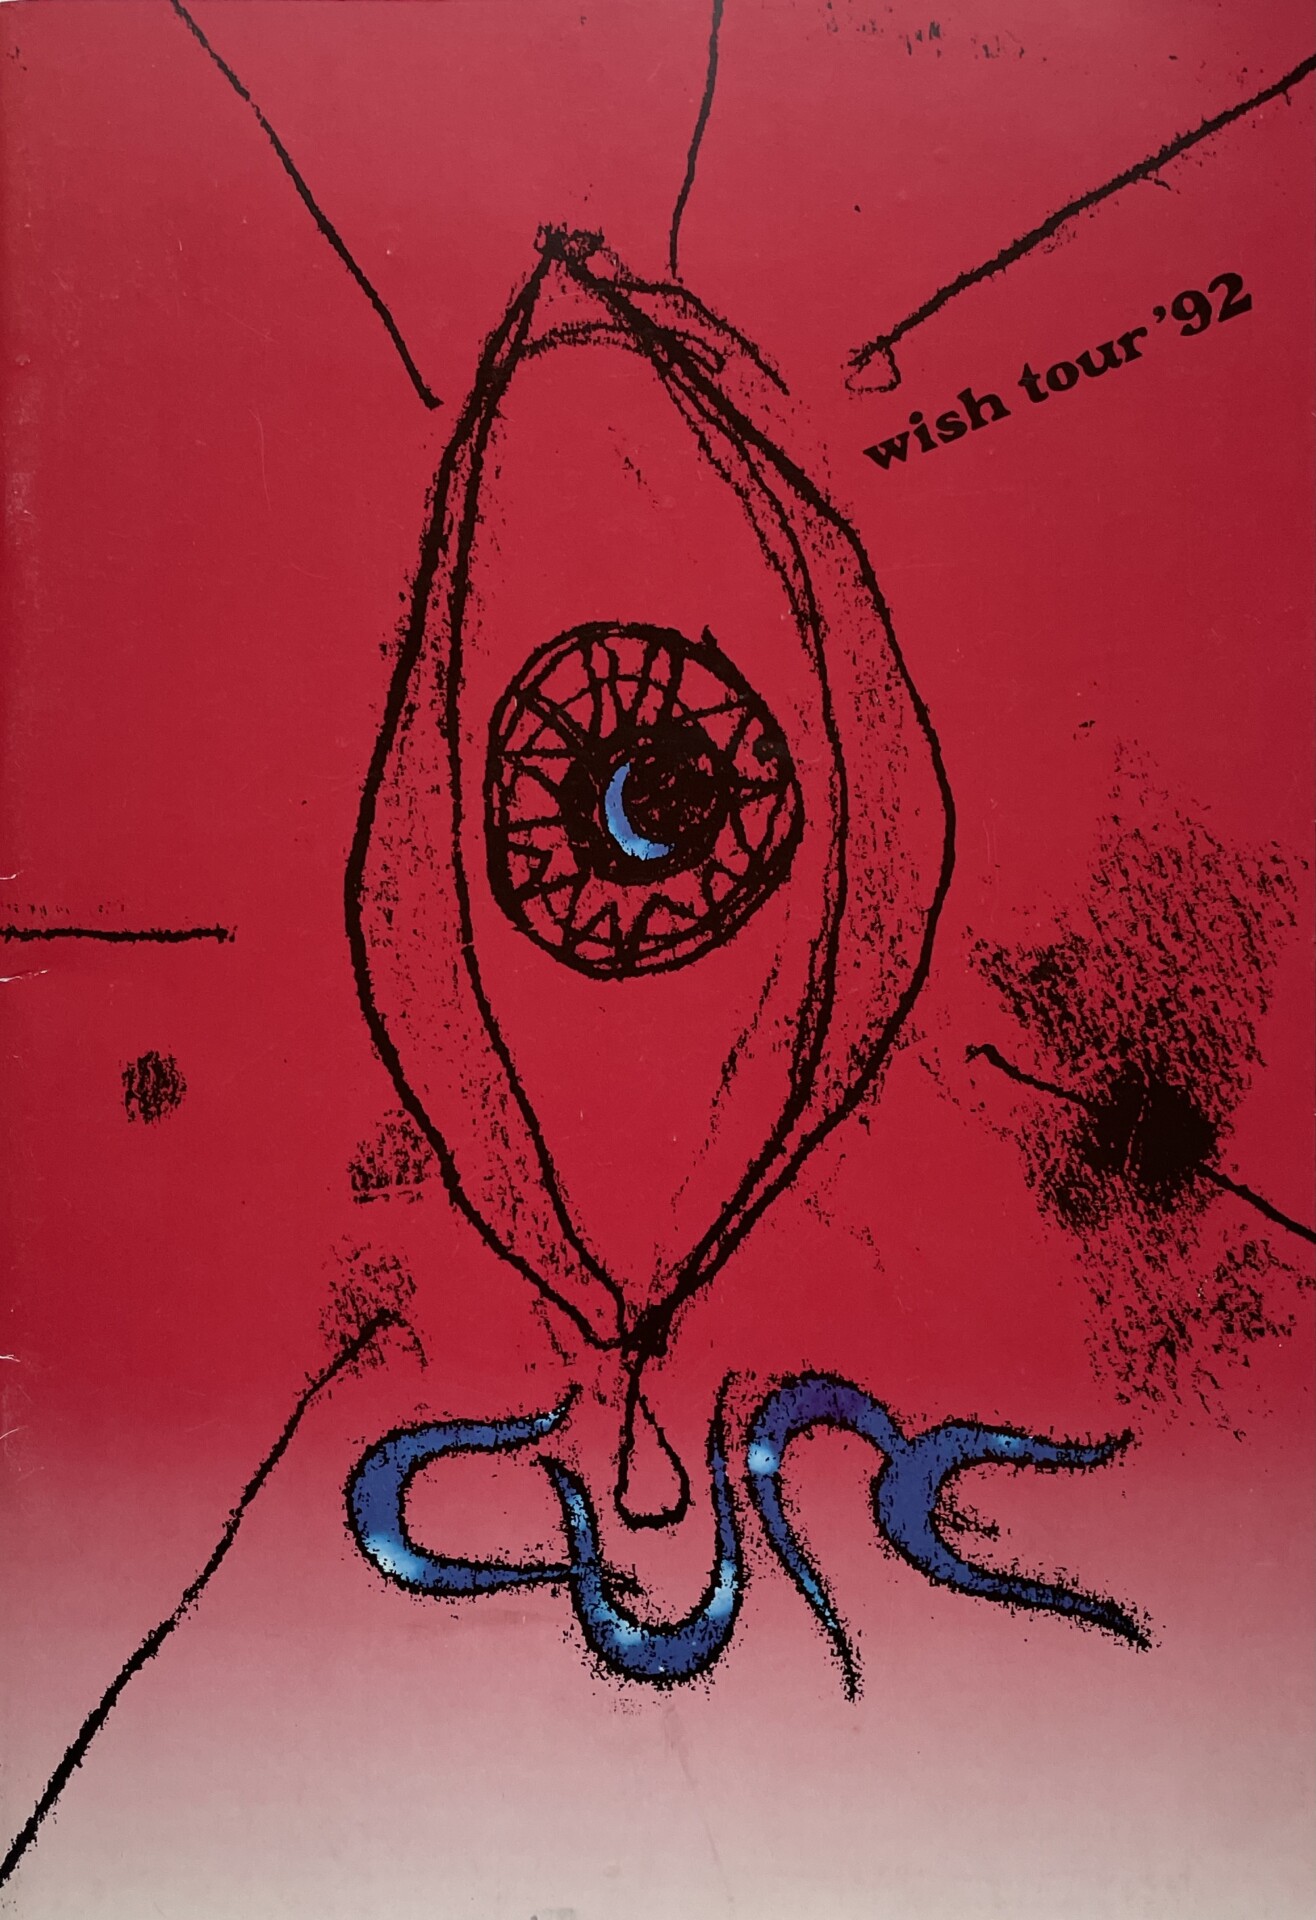 cure wish tour 1992